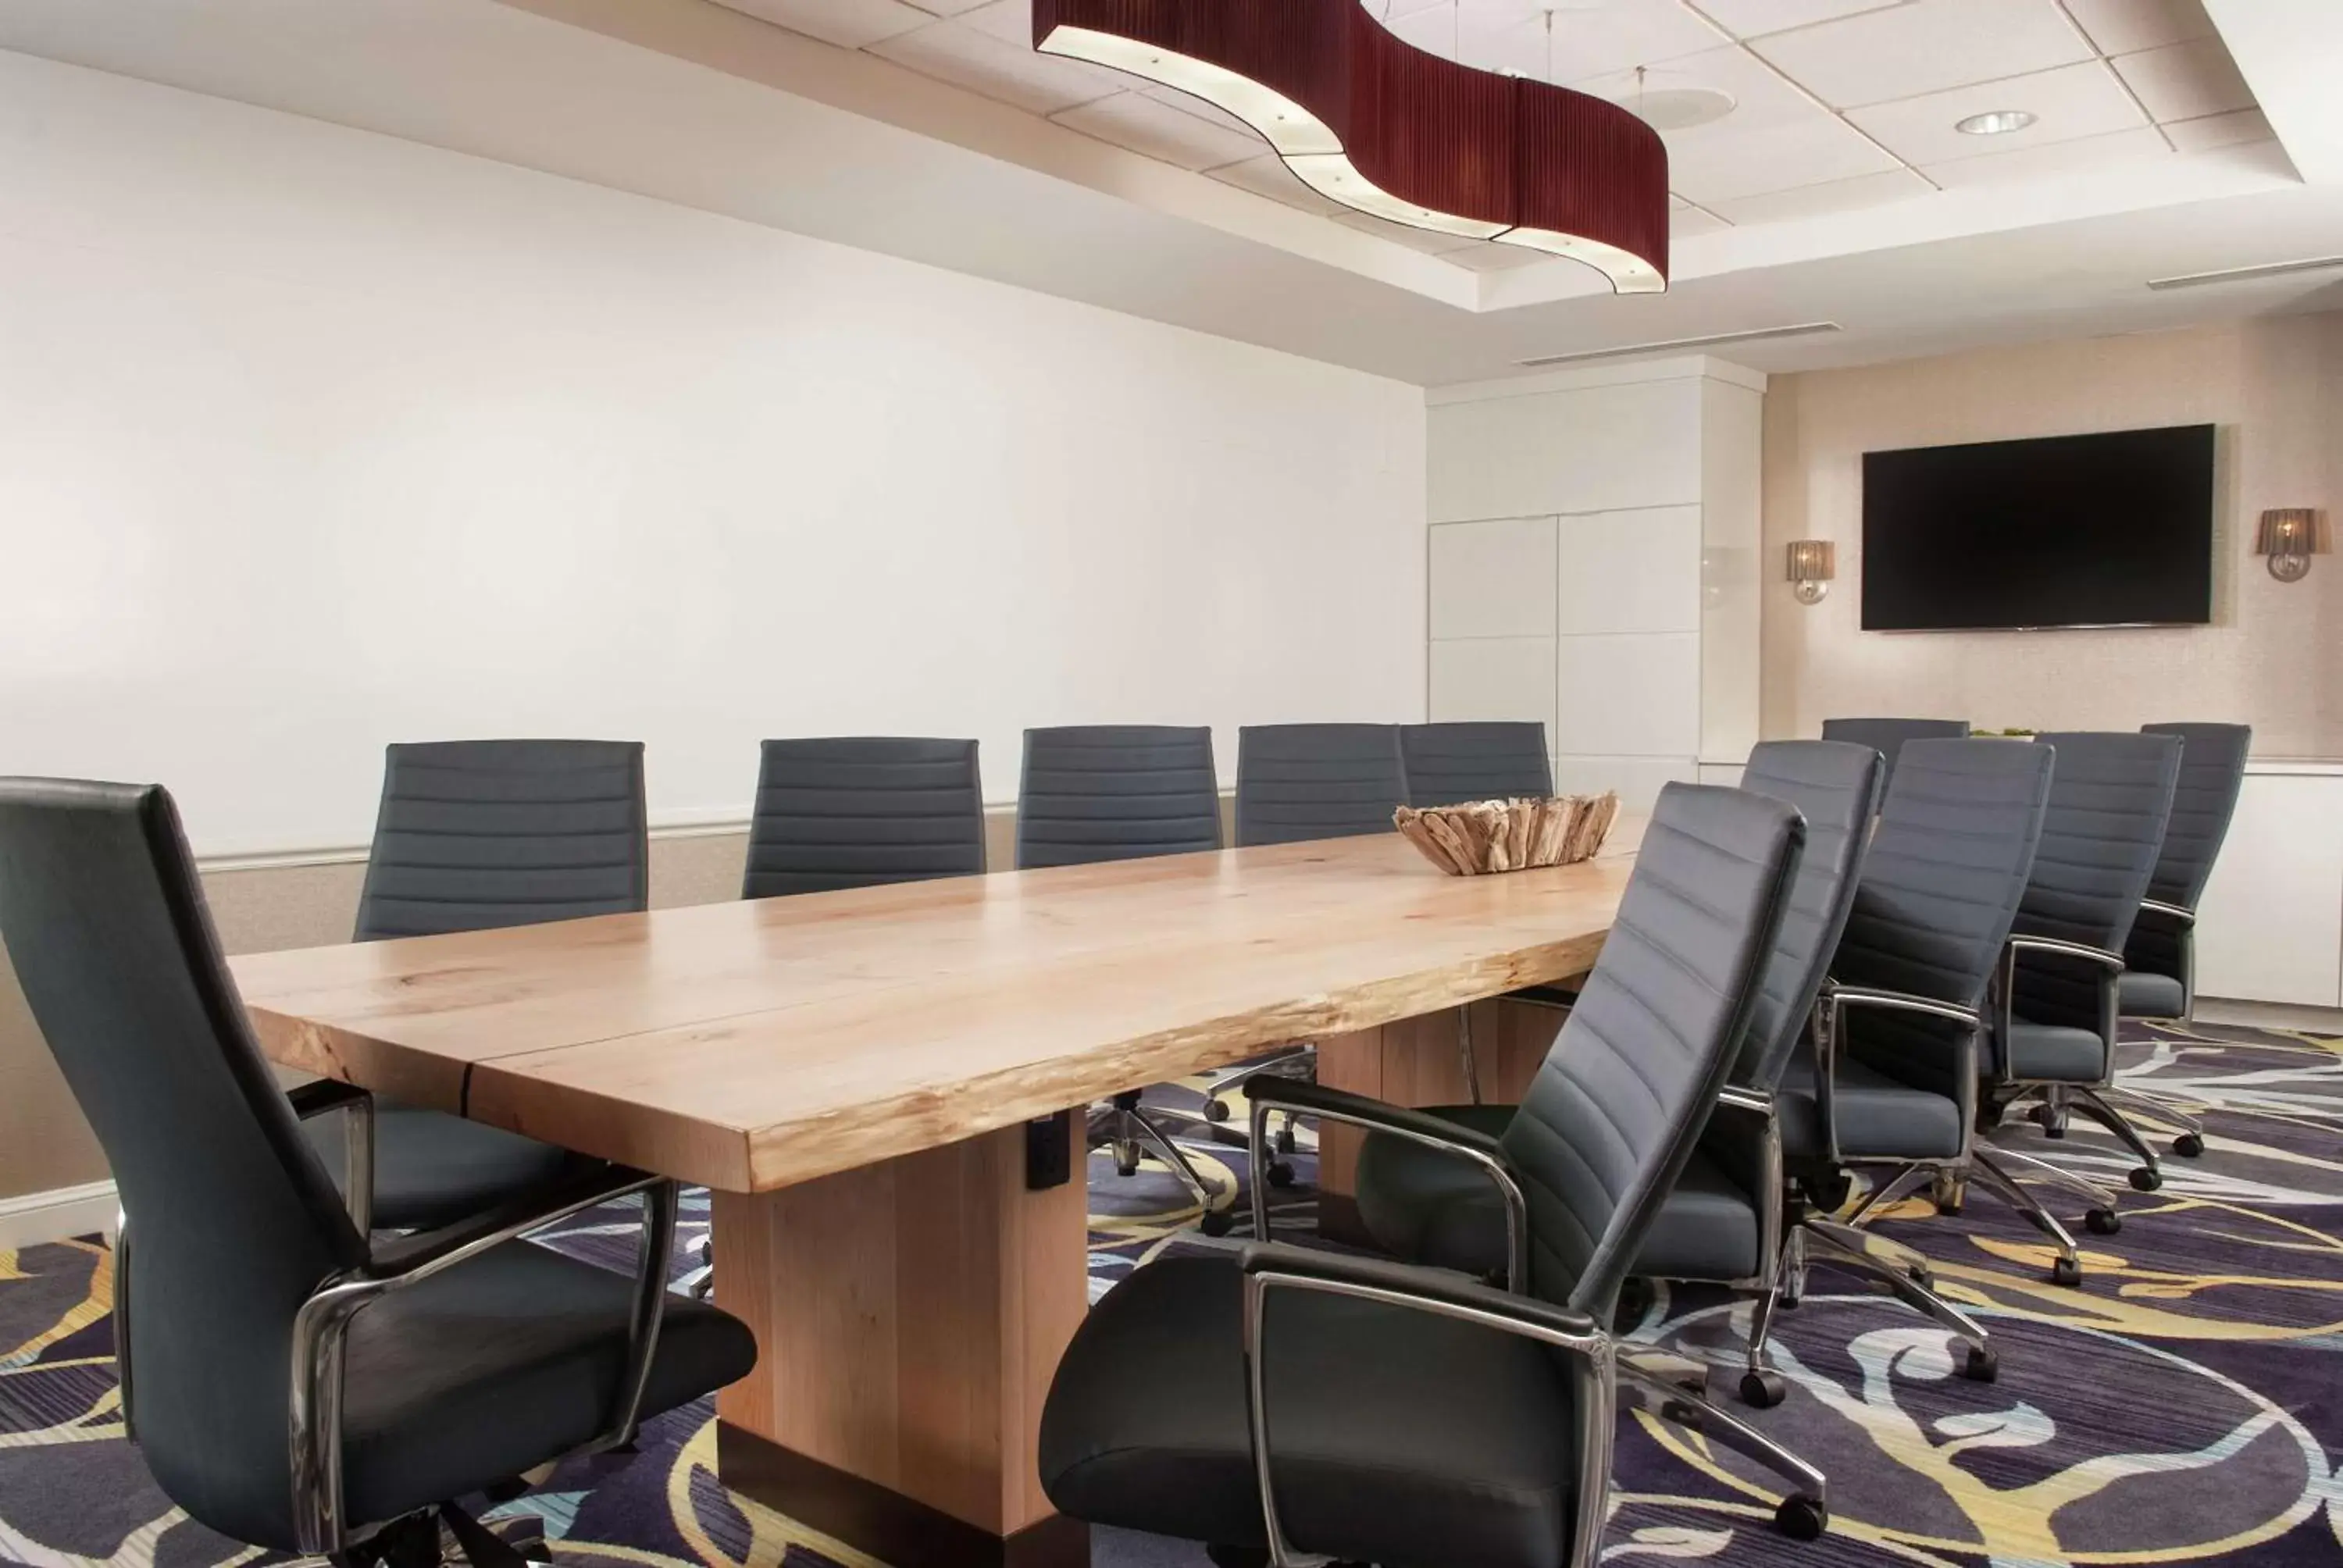 Meeting/conference room in Hilton Garden Inn Orlando Airport